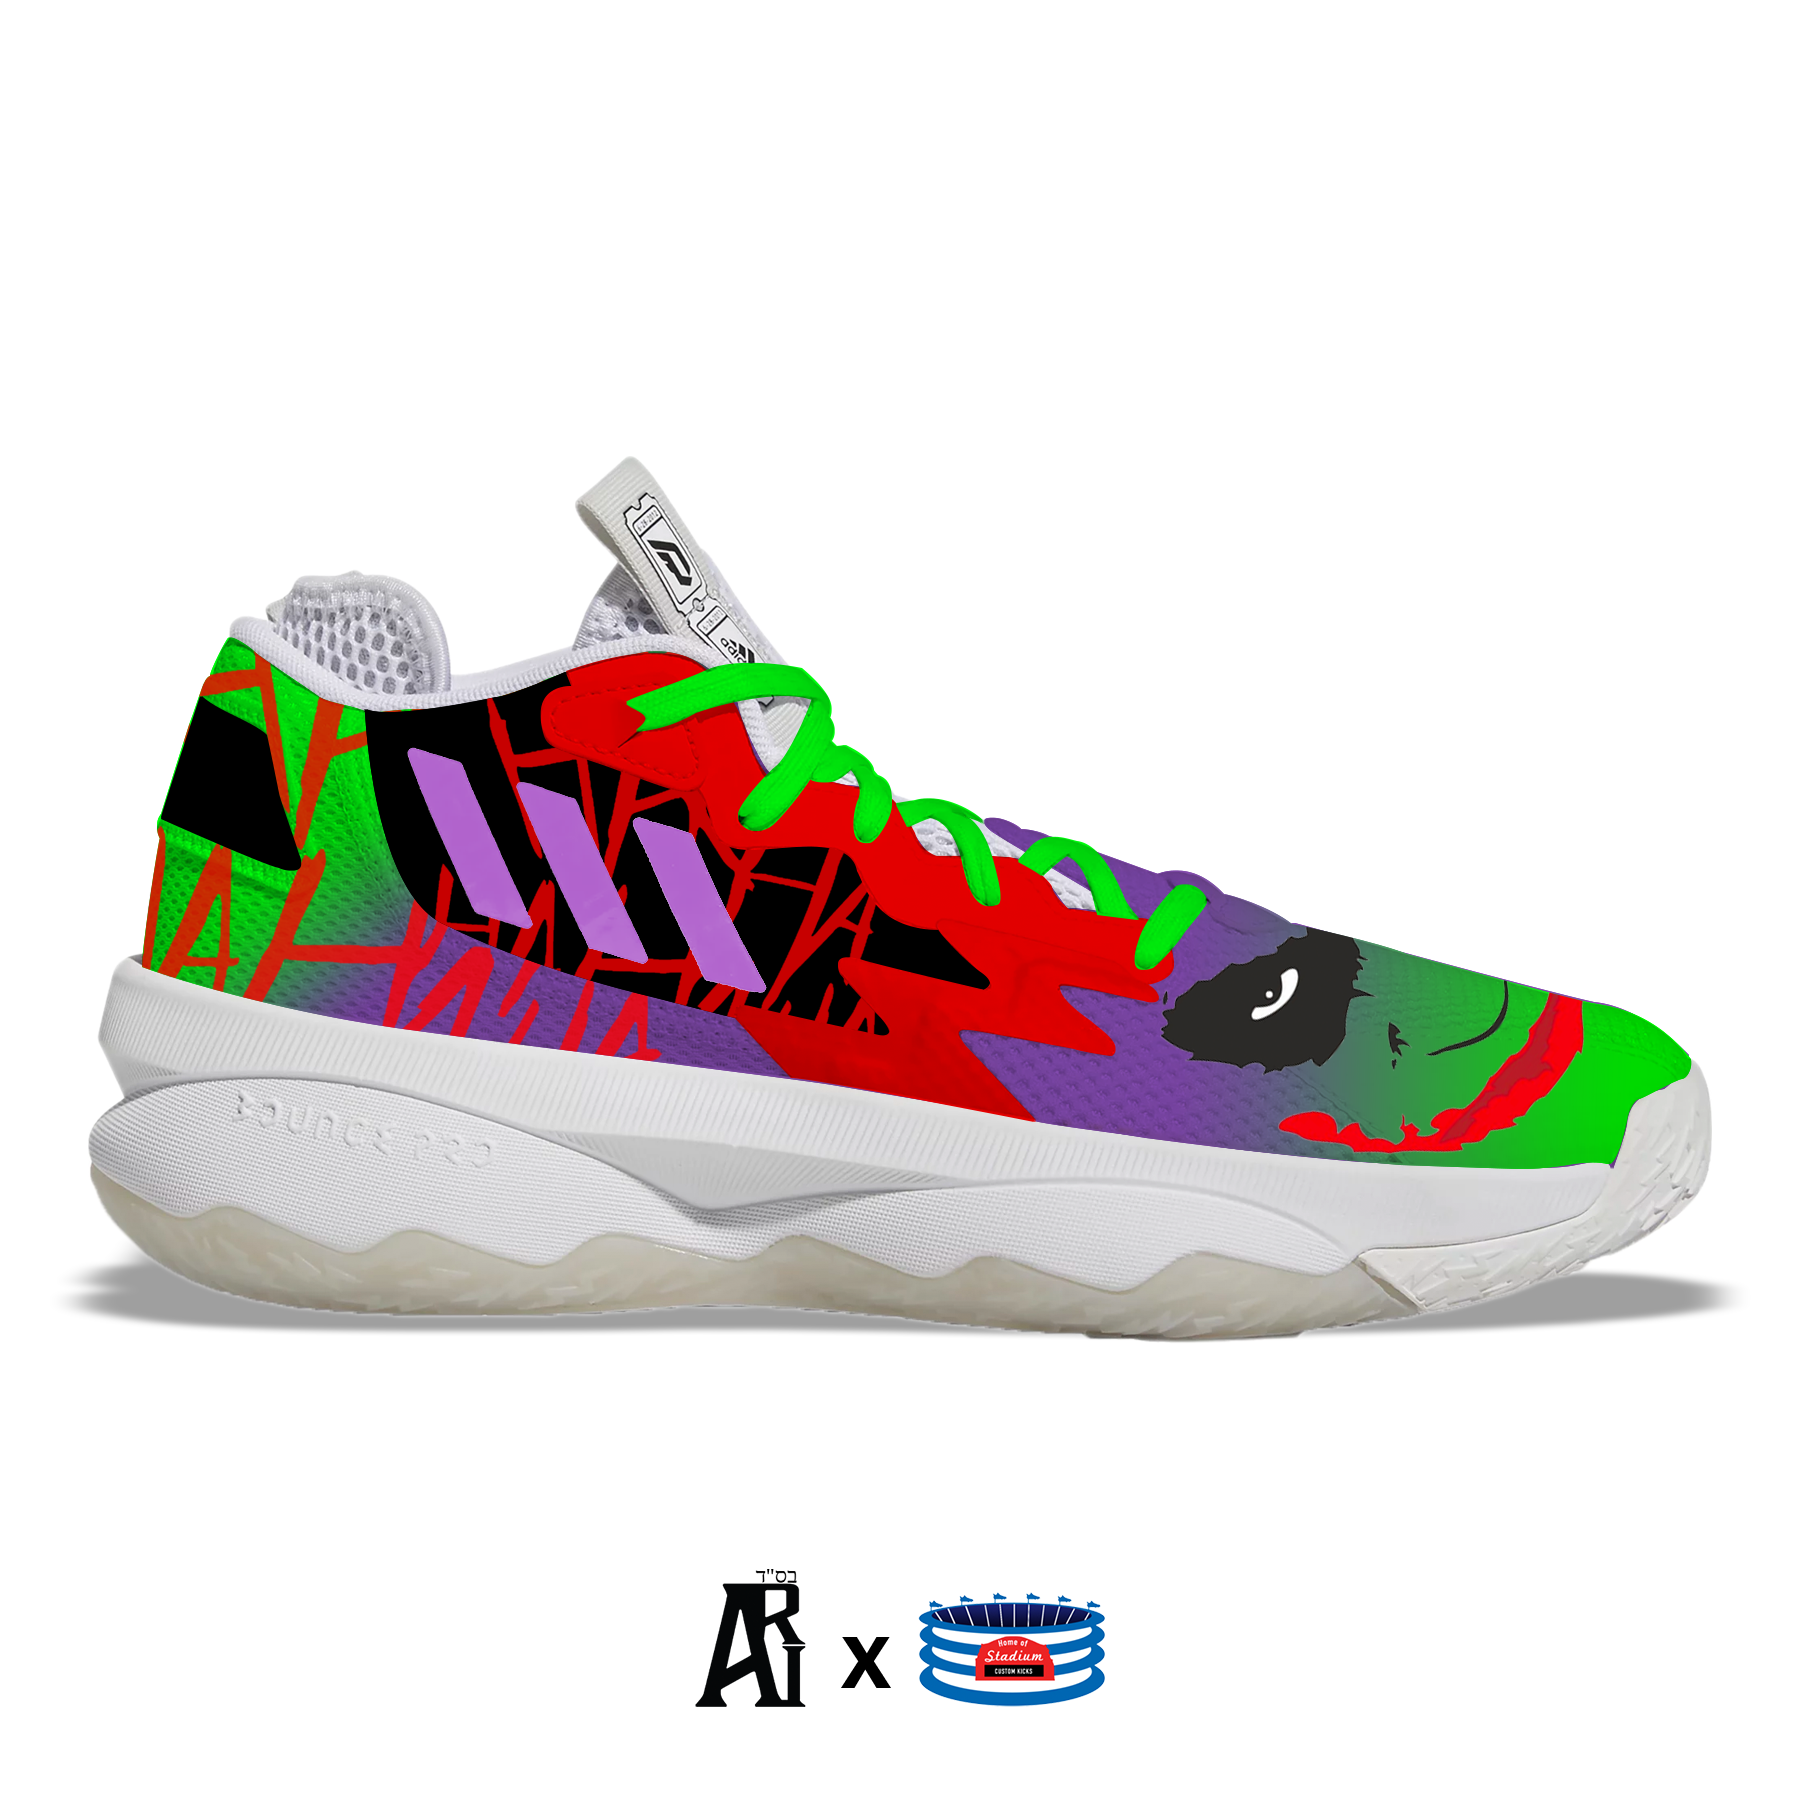 Joker" Adidas Dame 8 Basketball Shoes – Stadium Custom